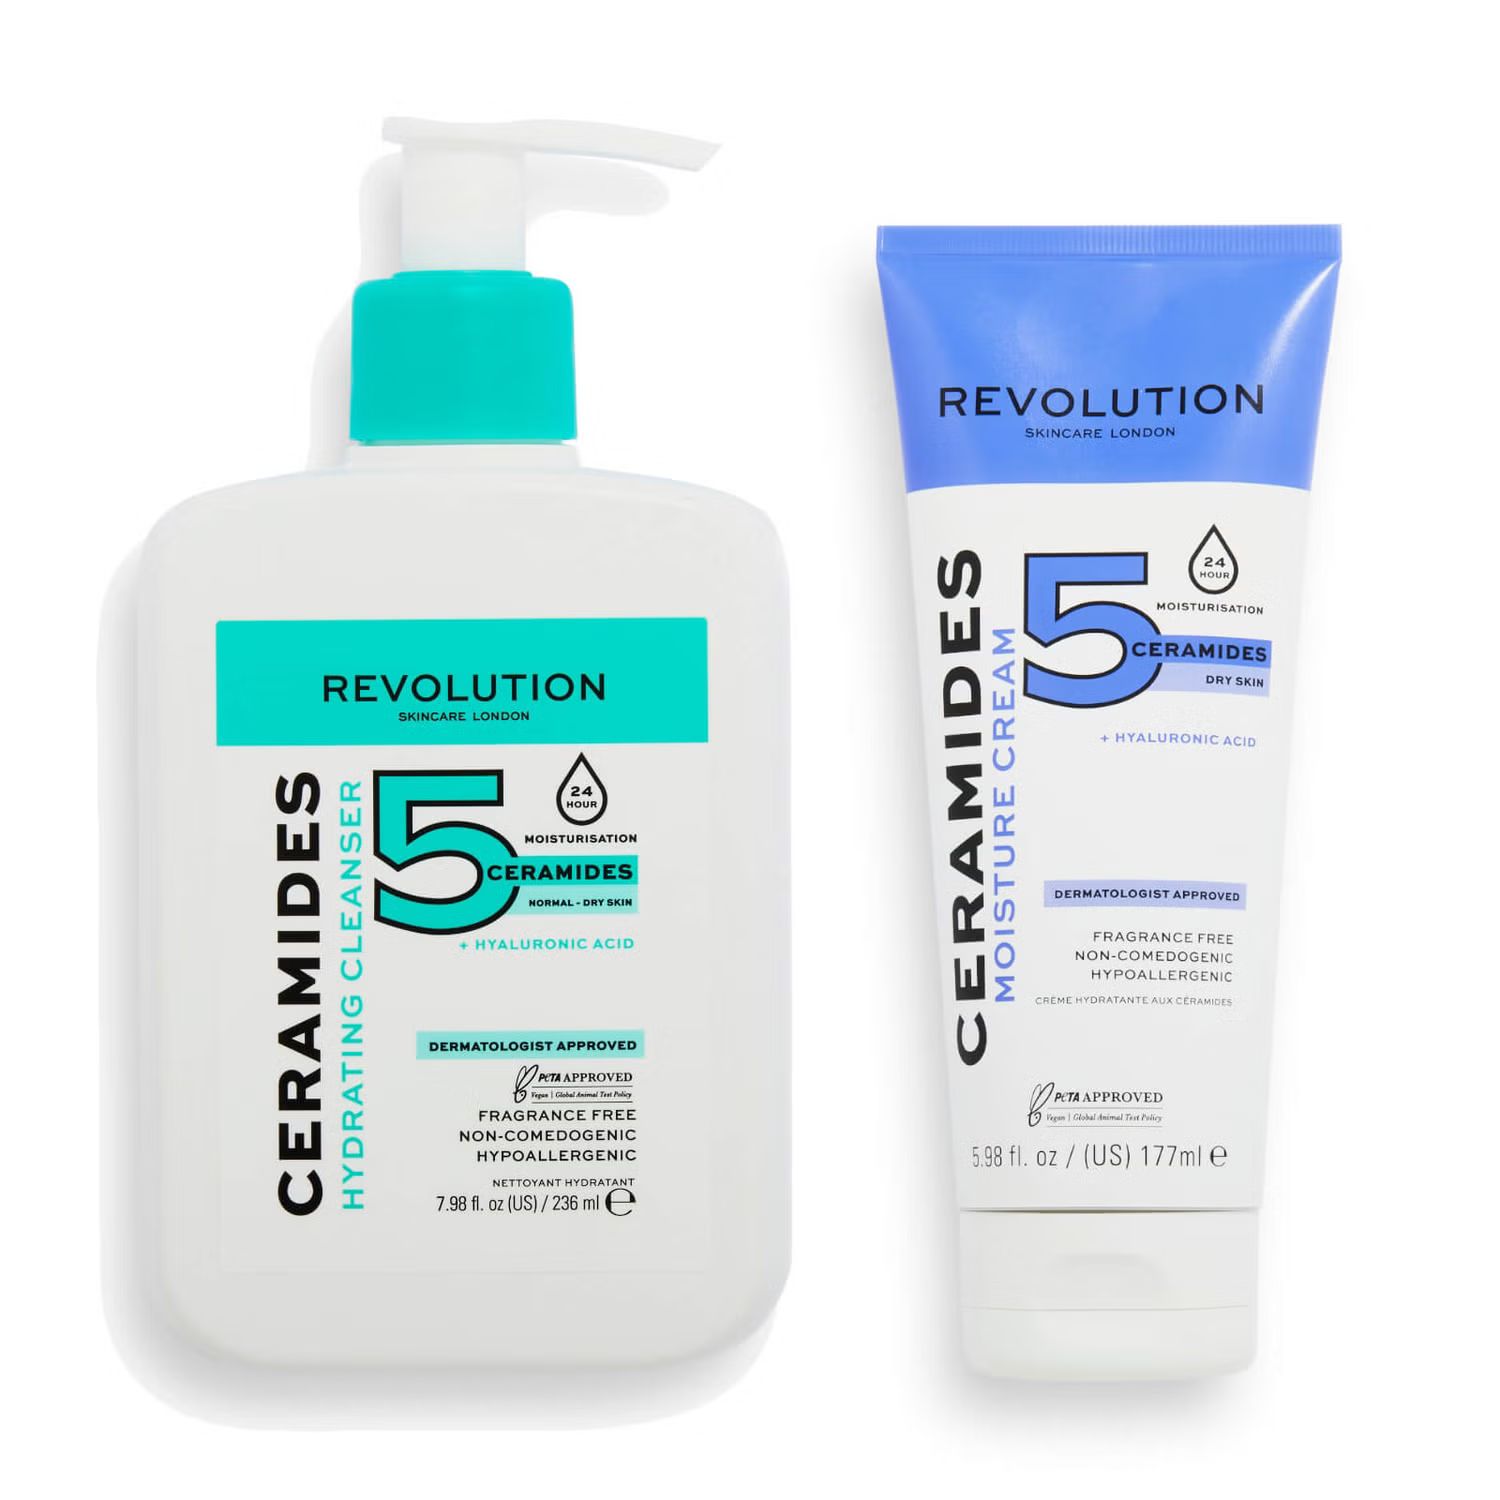 Revolution Skincare Ceramides Starter Kit - Dry Skin | Look Fantastic (UK)